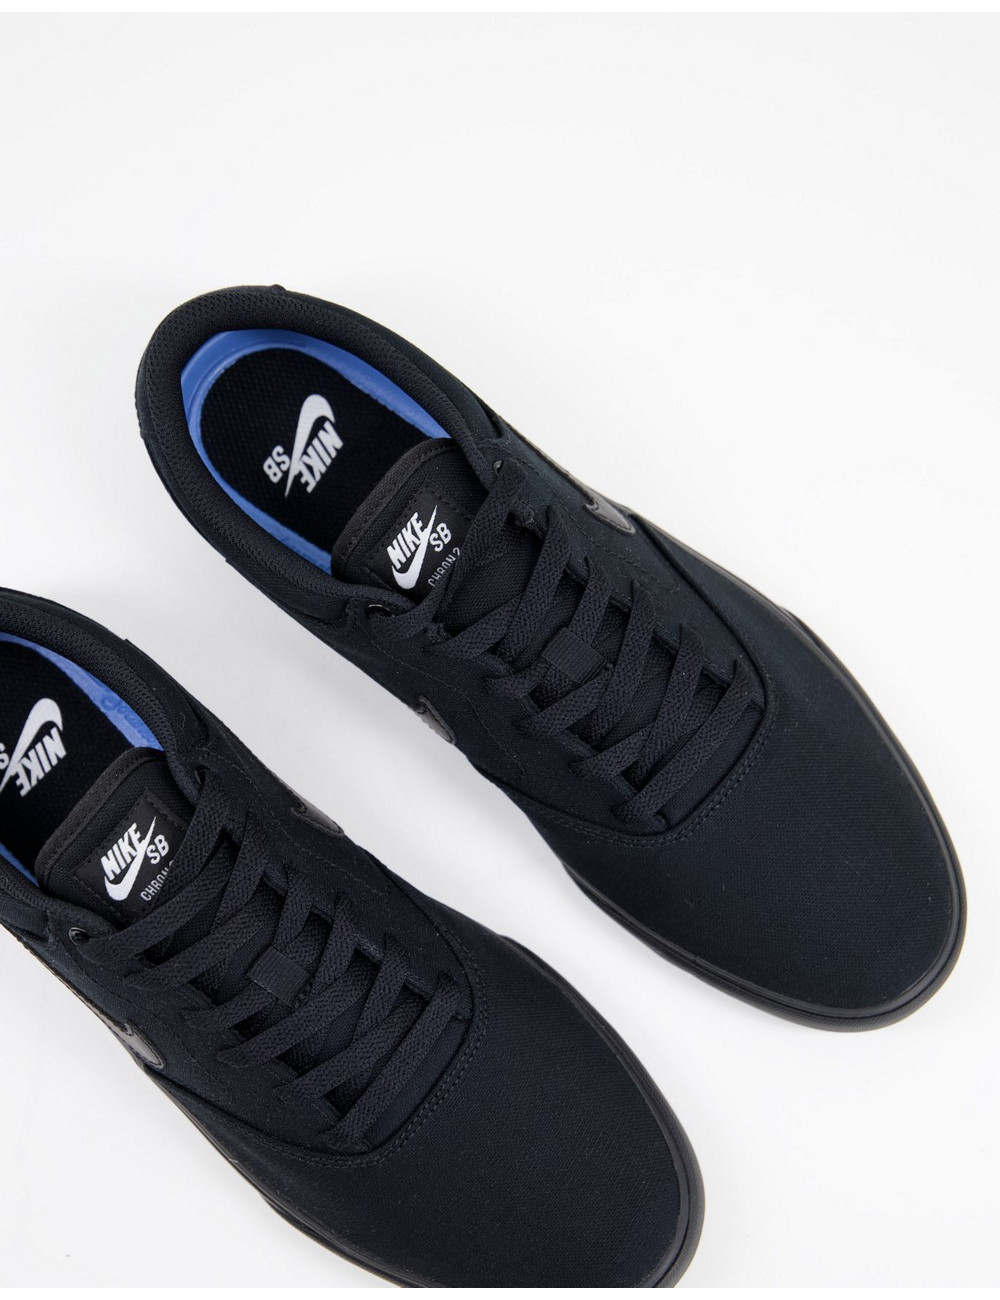 Nike SB Chron 2 in black...